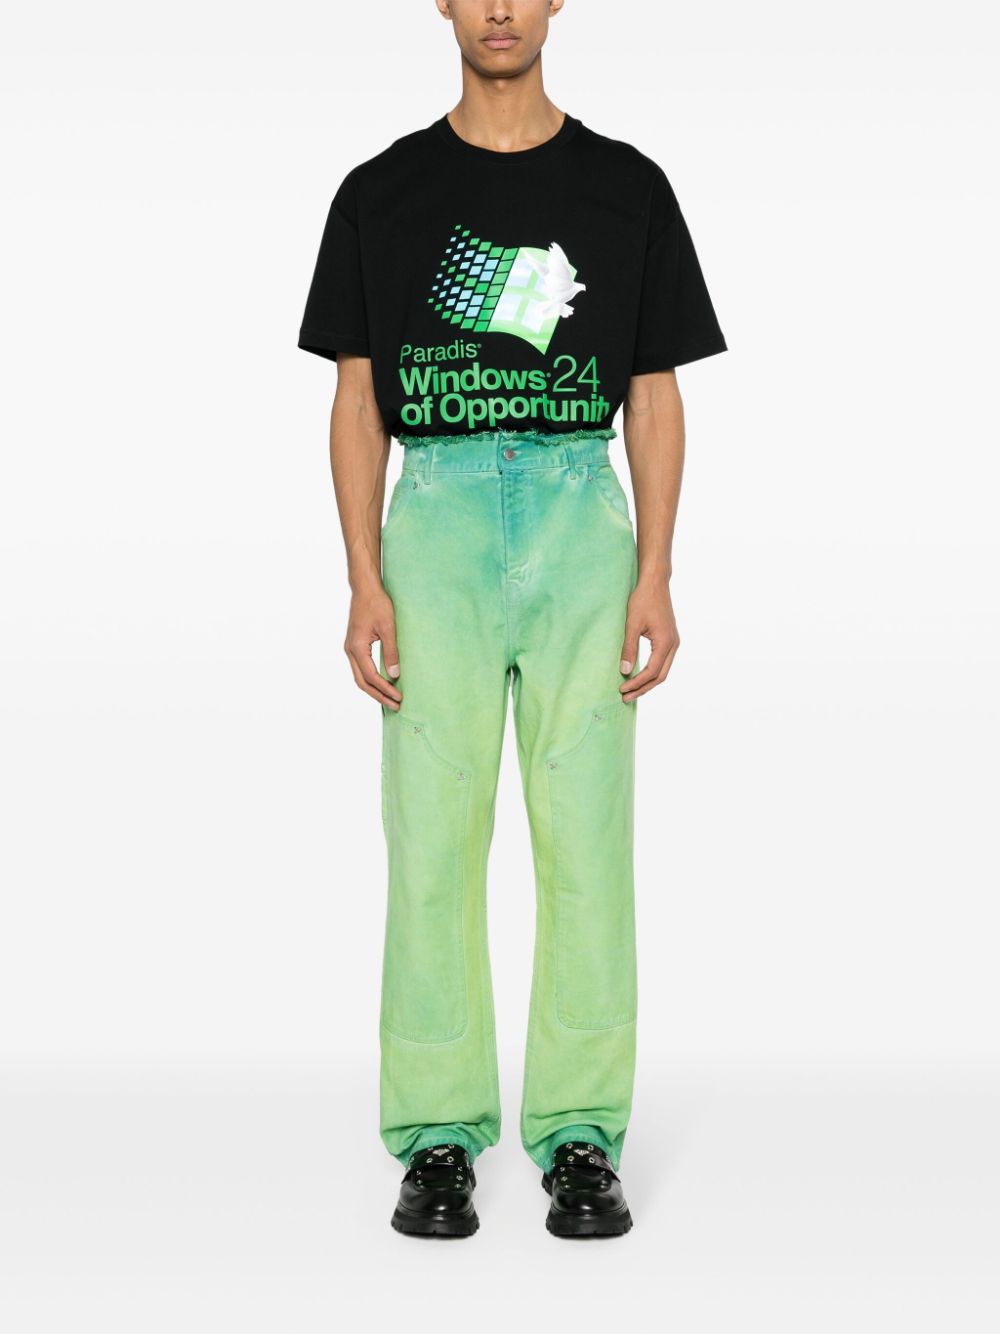 3PARADIS Katoenen T-shirt met hologram - Zwart